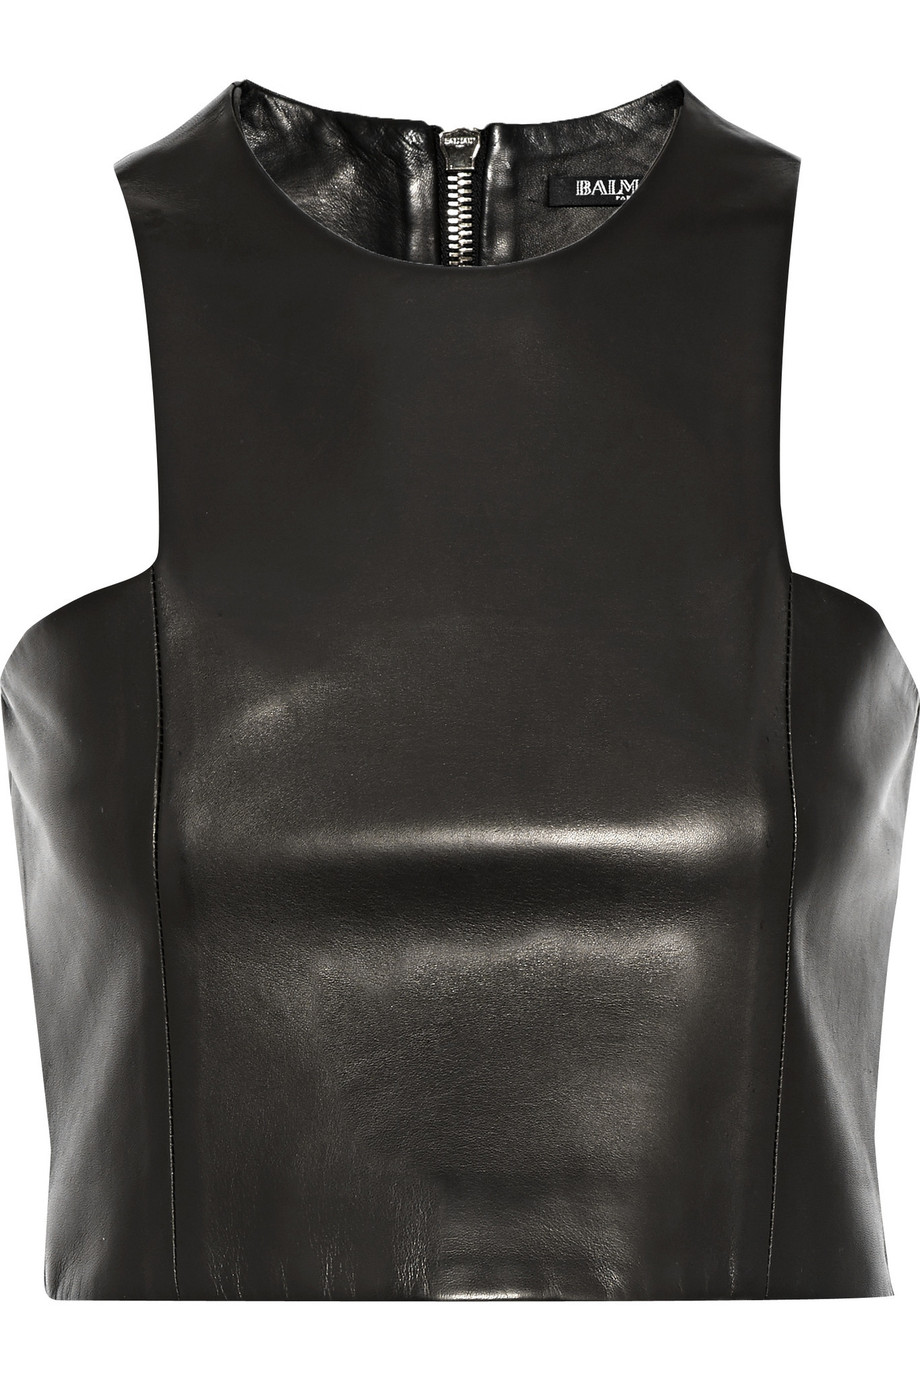 Balmain Cropped Leather Top | ModeSens